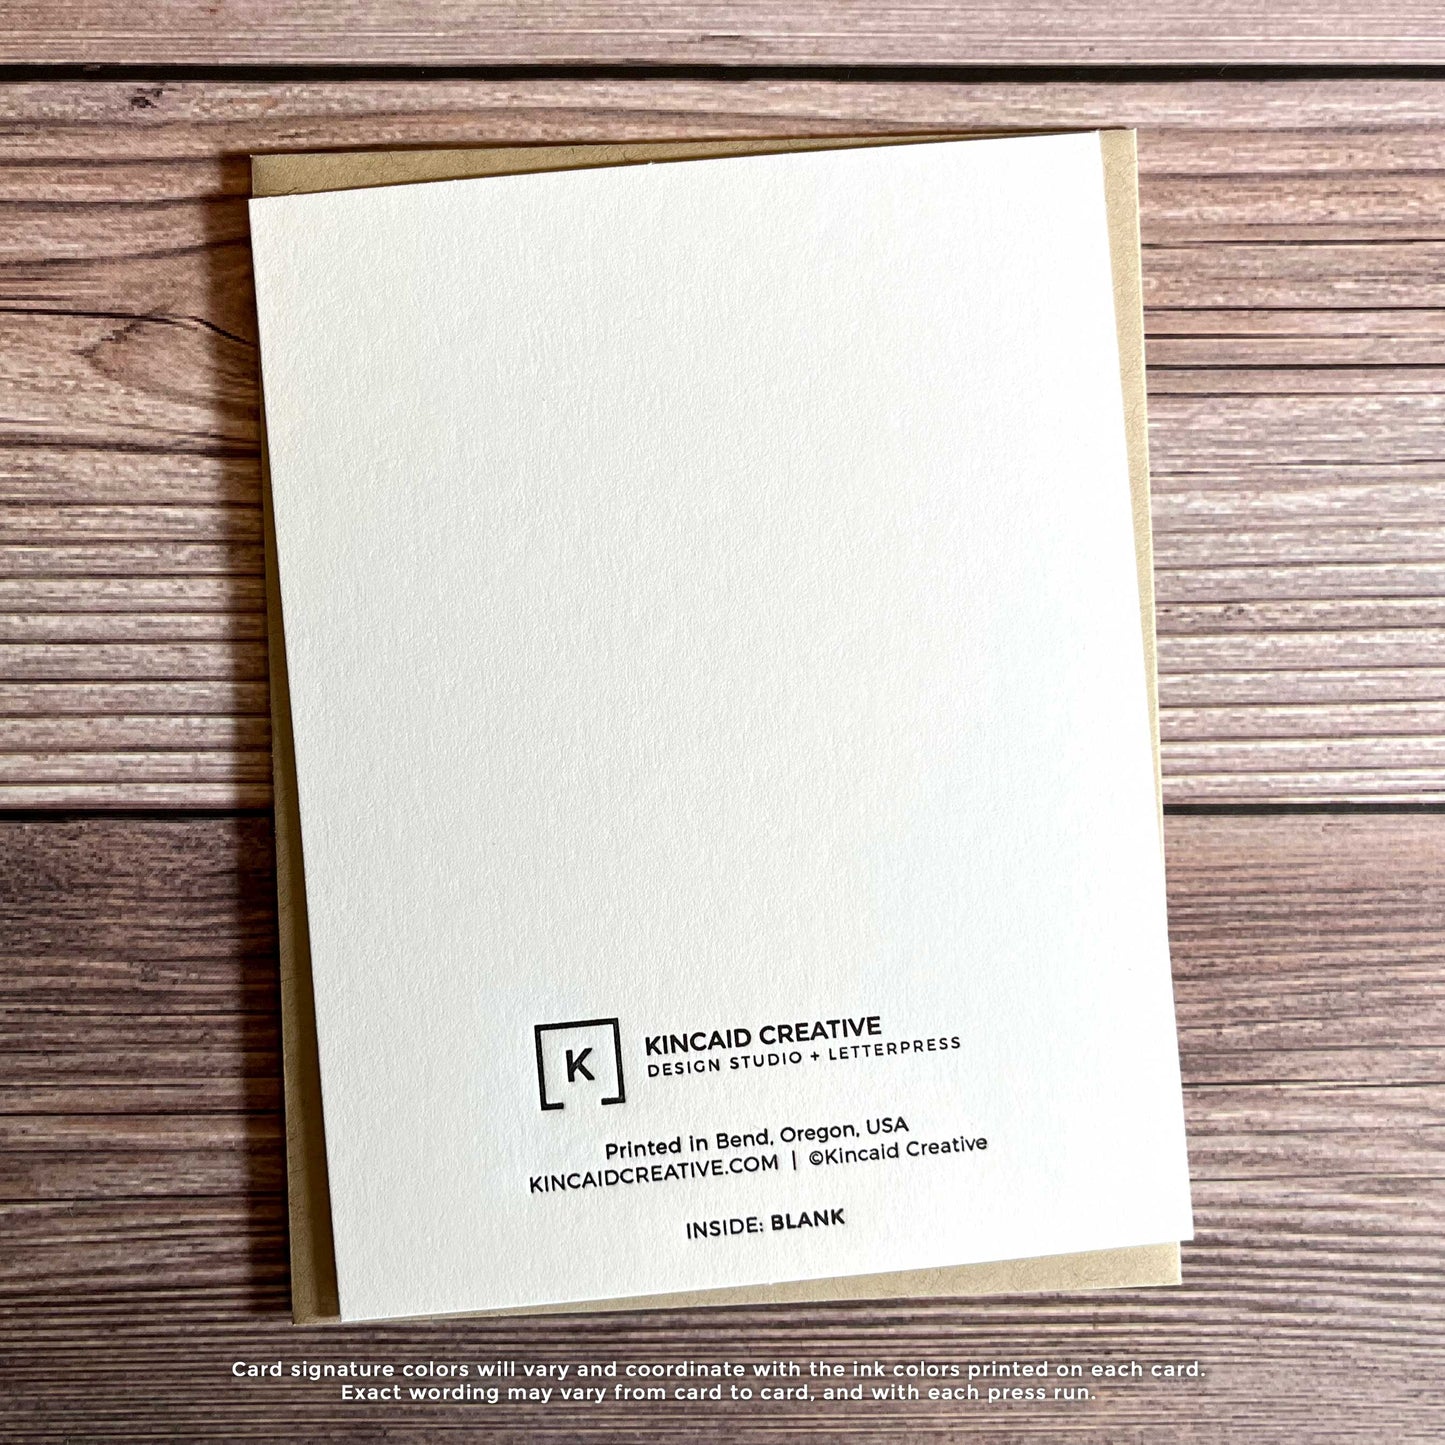 Letterpress birthday greeting card, blank inside, back view of card, Kincaid Creative Design and Letterpress Studio, Bend, Oregon